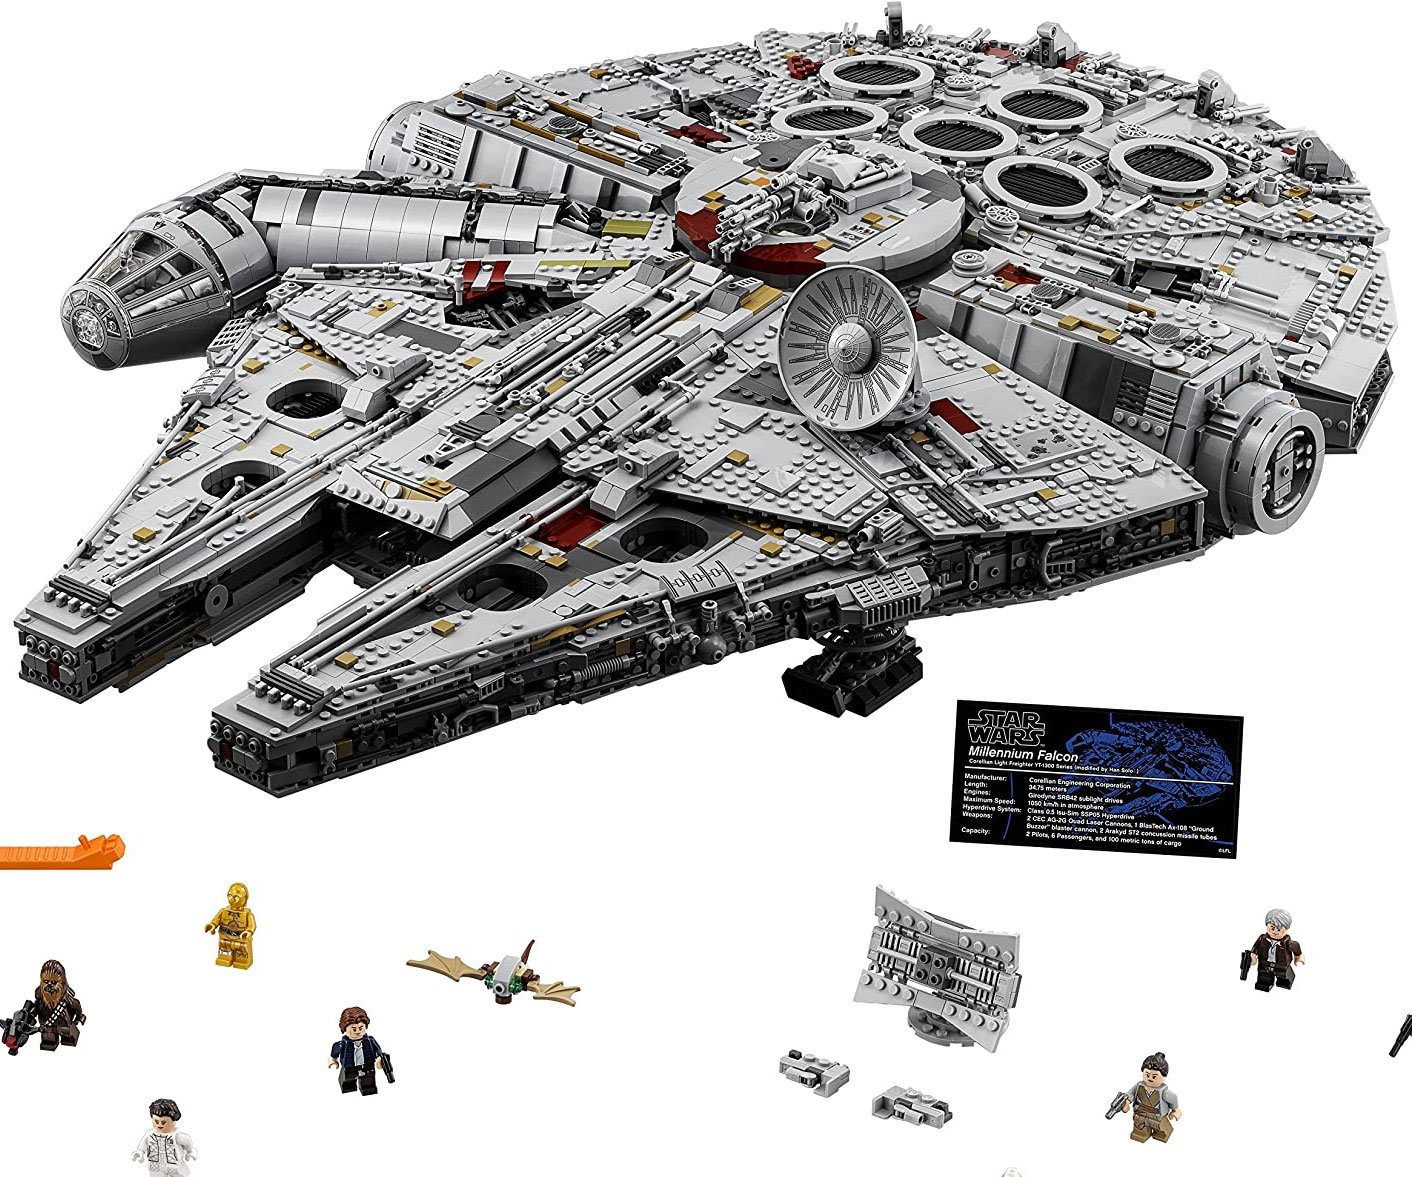 7541 Piece Lego Millennium Falcon 2